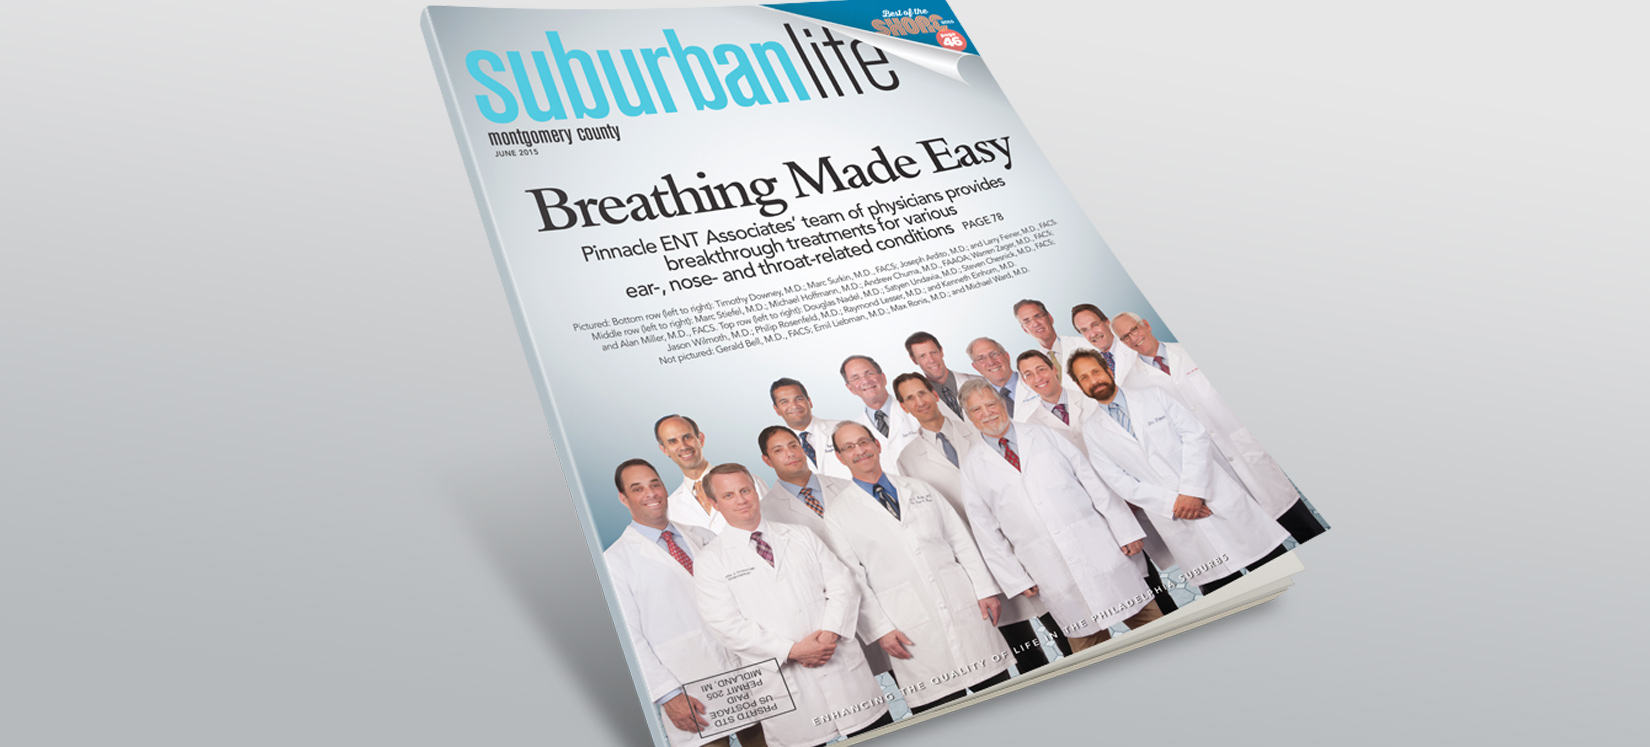 pinnacle ENT associates photo on Suburban Life magazine cover